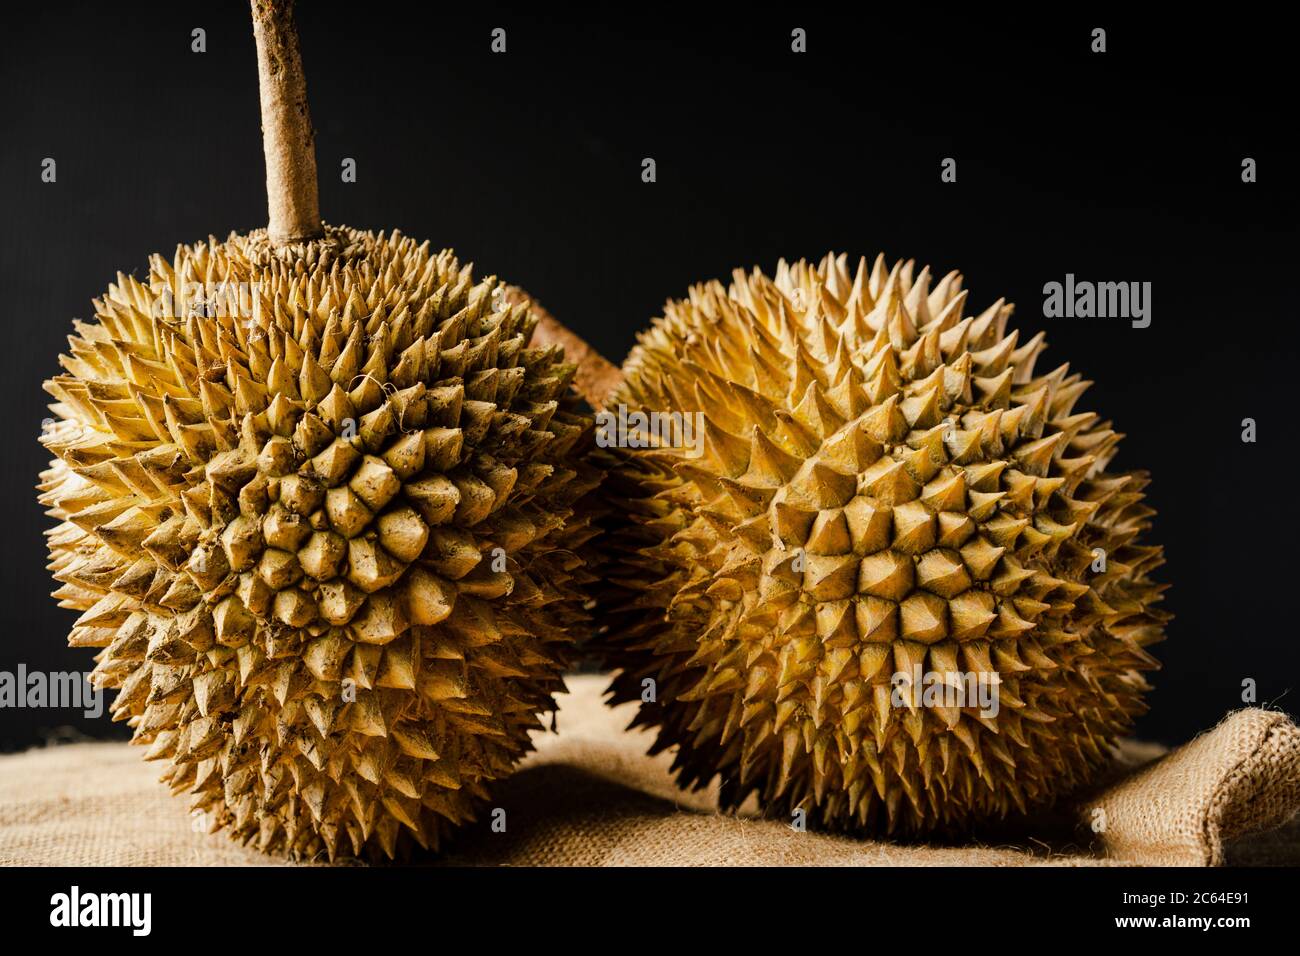 Durian ioi vs udang merah